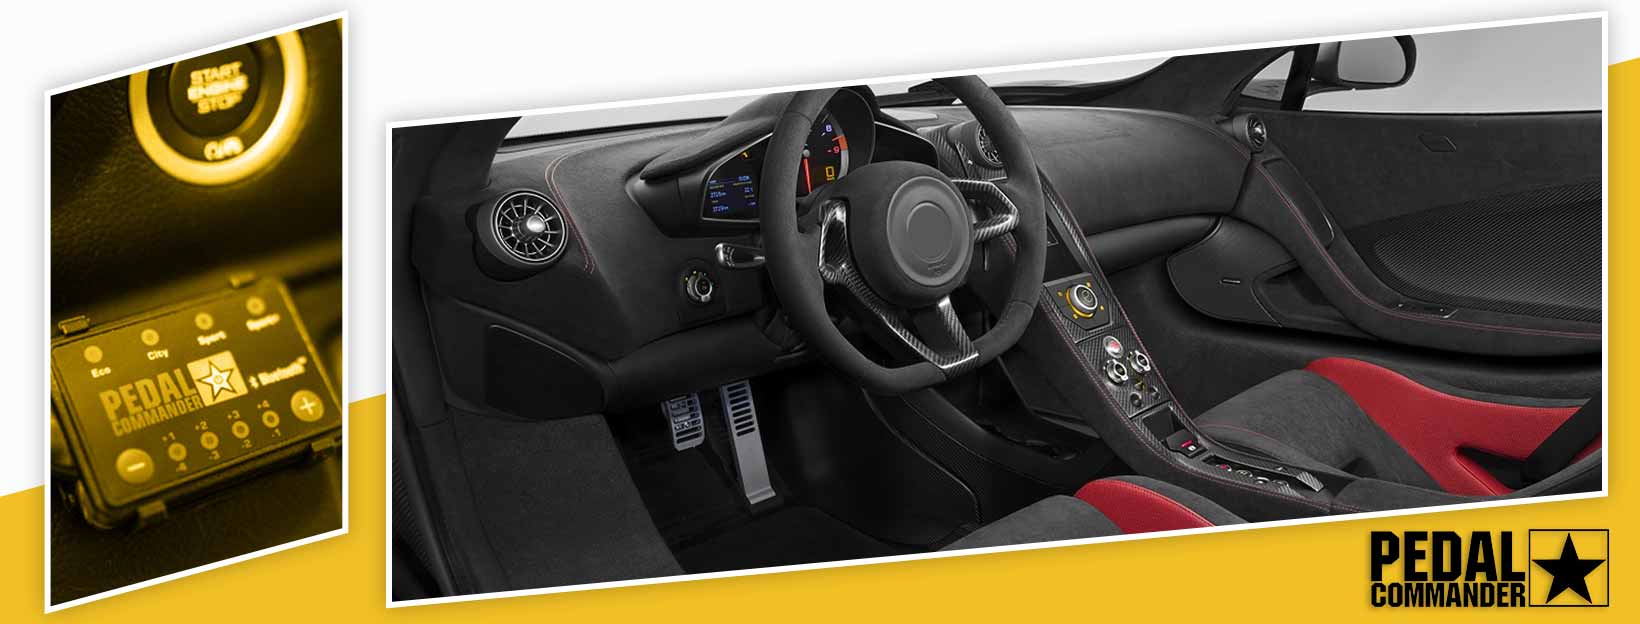 Pedal Commander for McLaren 675LT - interior